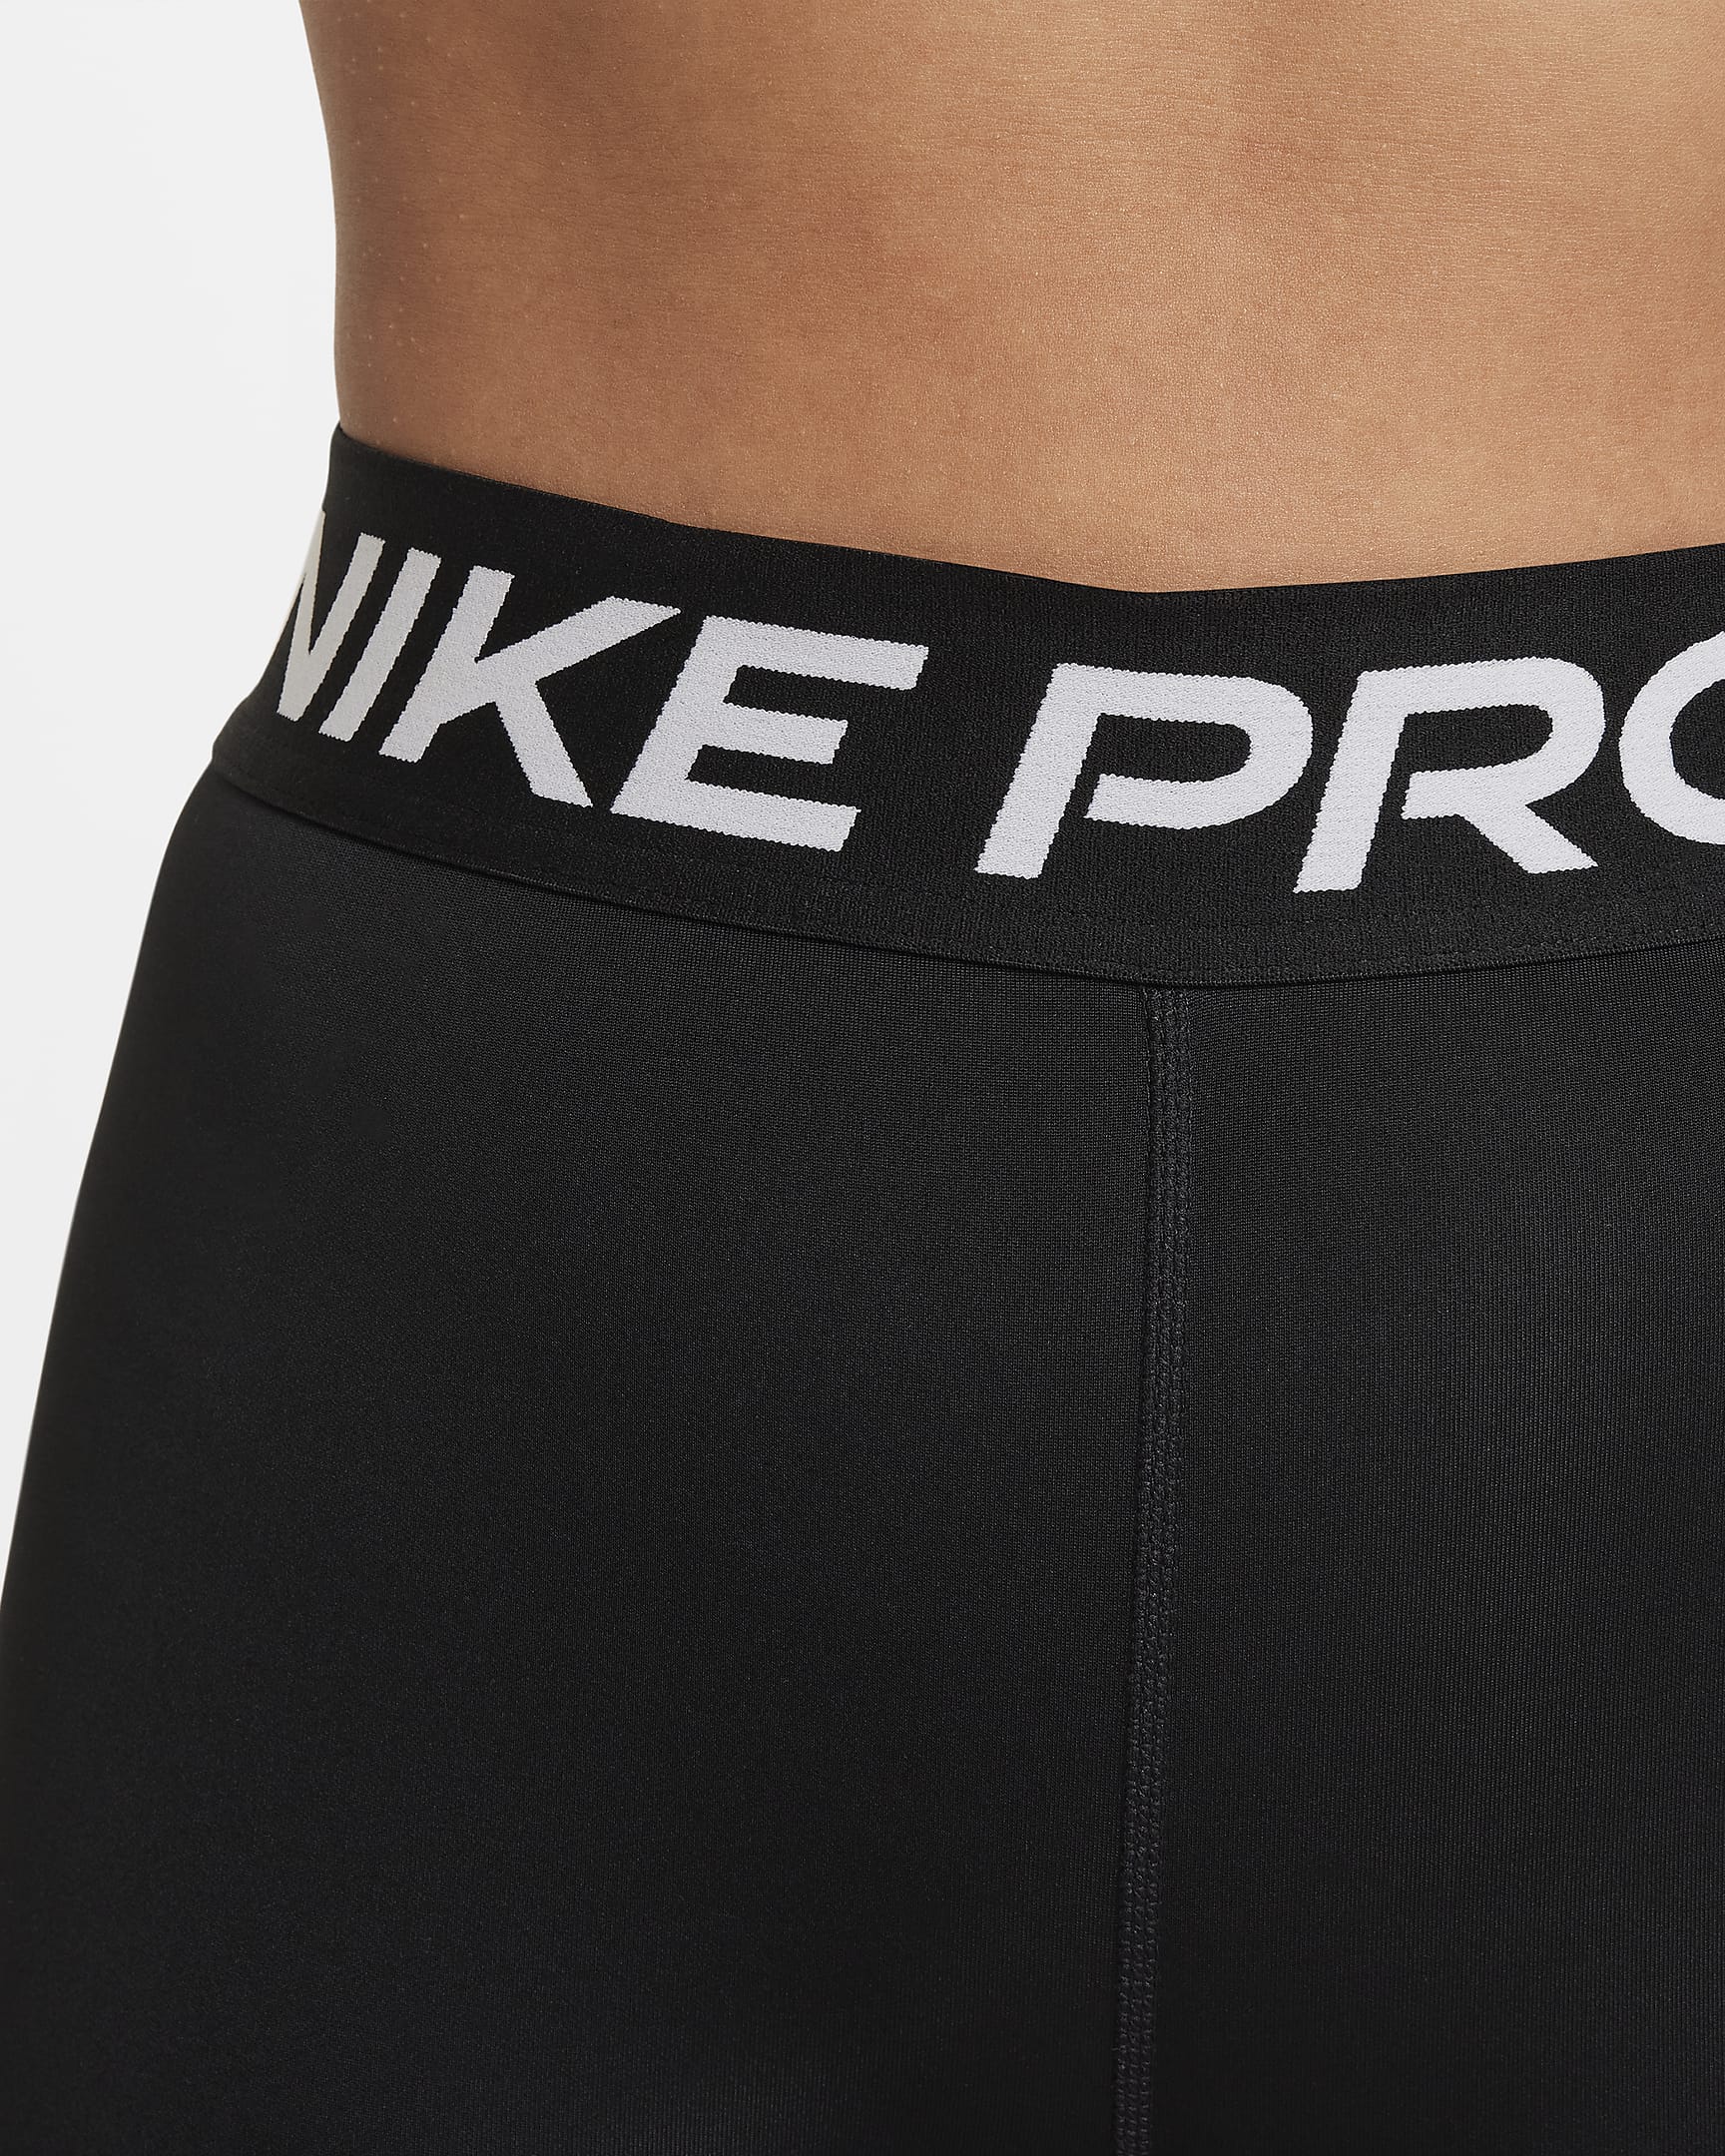 Nike Pro Dri-FIT Older Kids' (Girls') Leggings - Black/White